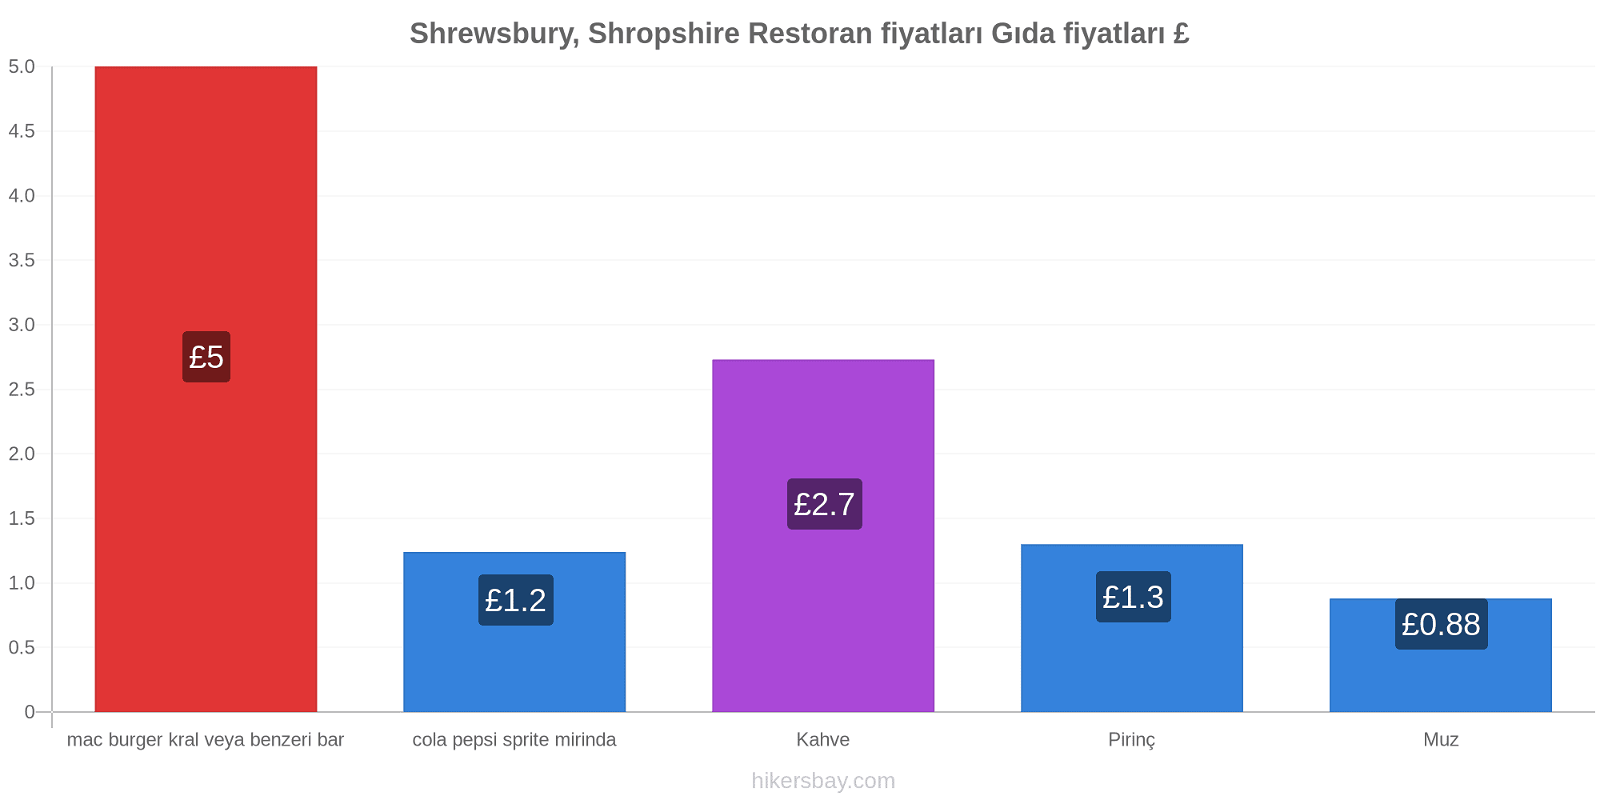 Shrewsbury, Shropshire fiyat değişiklikleri hikersbay.com